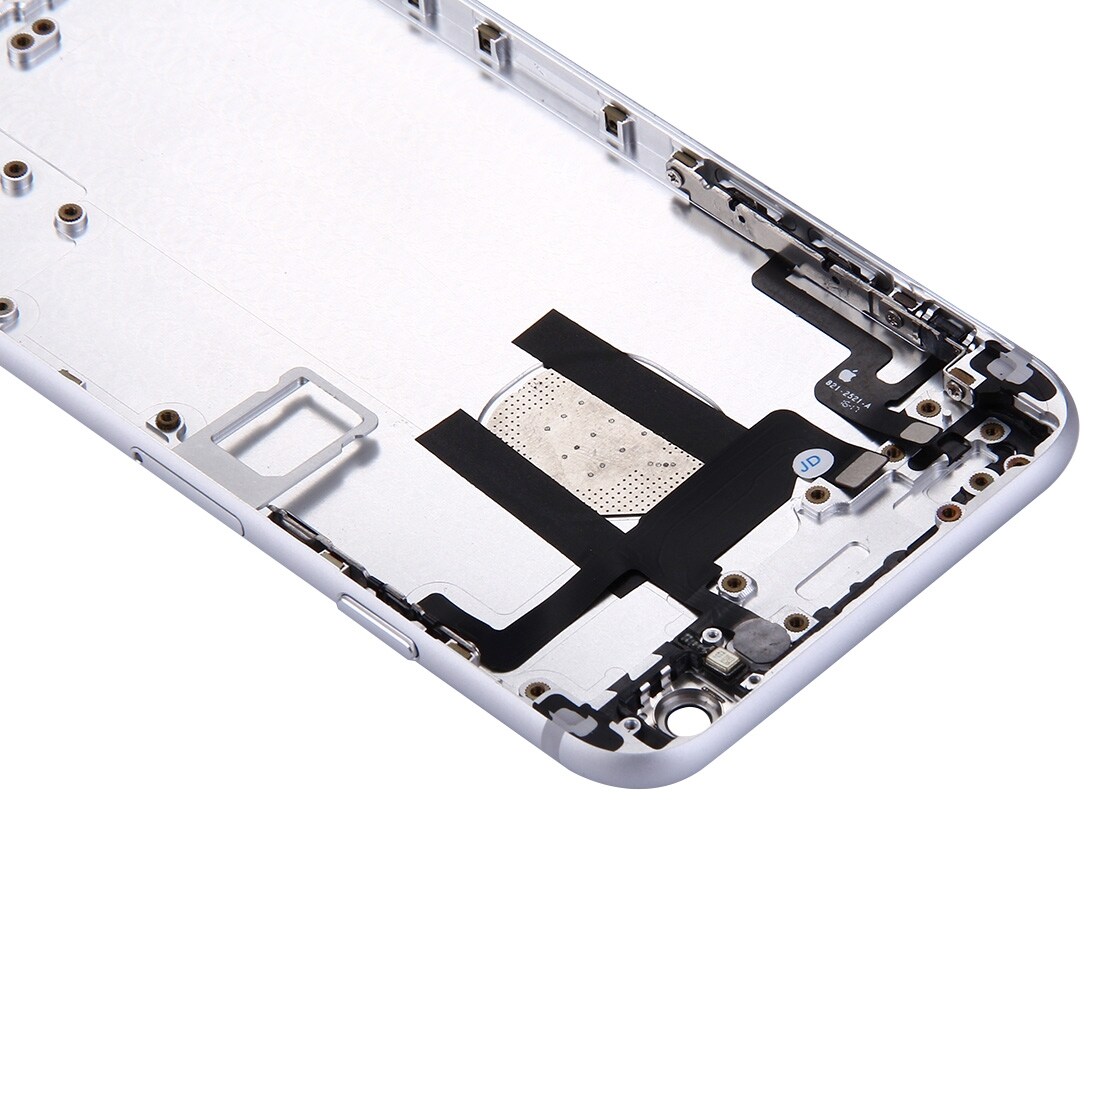 Komplet coverudskiftning iPhone 6 -Sølv